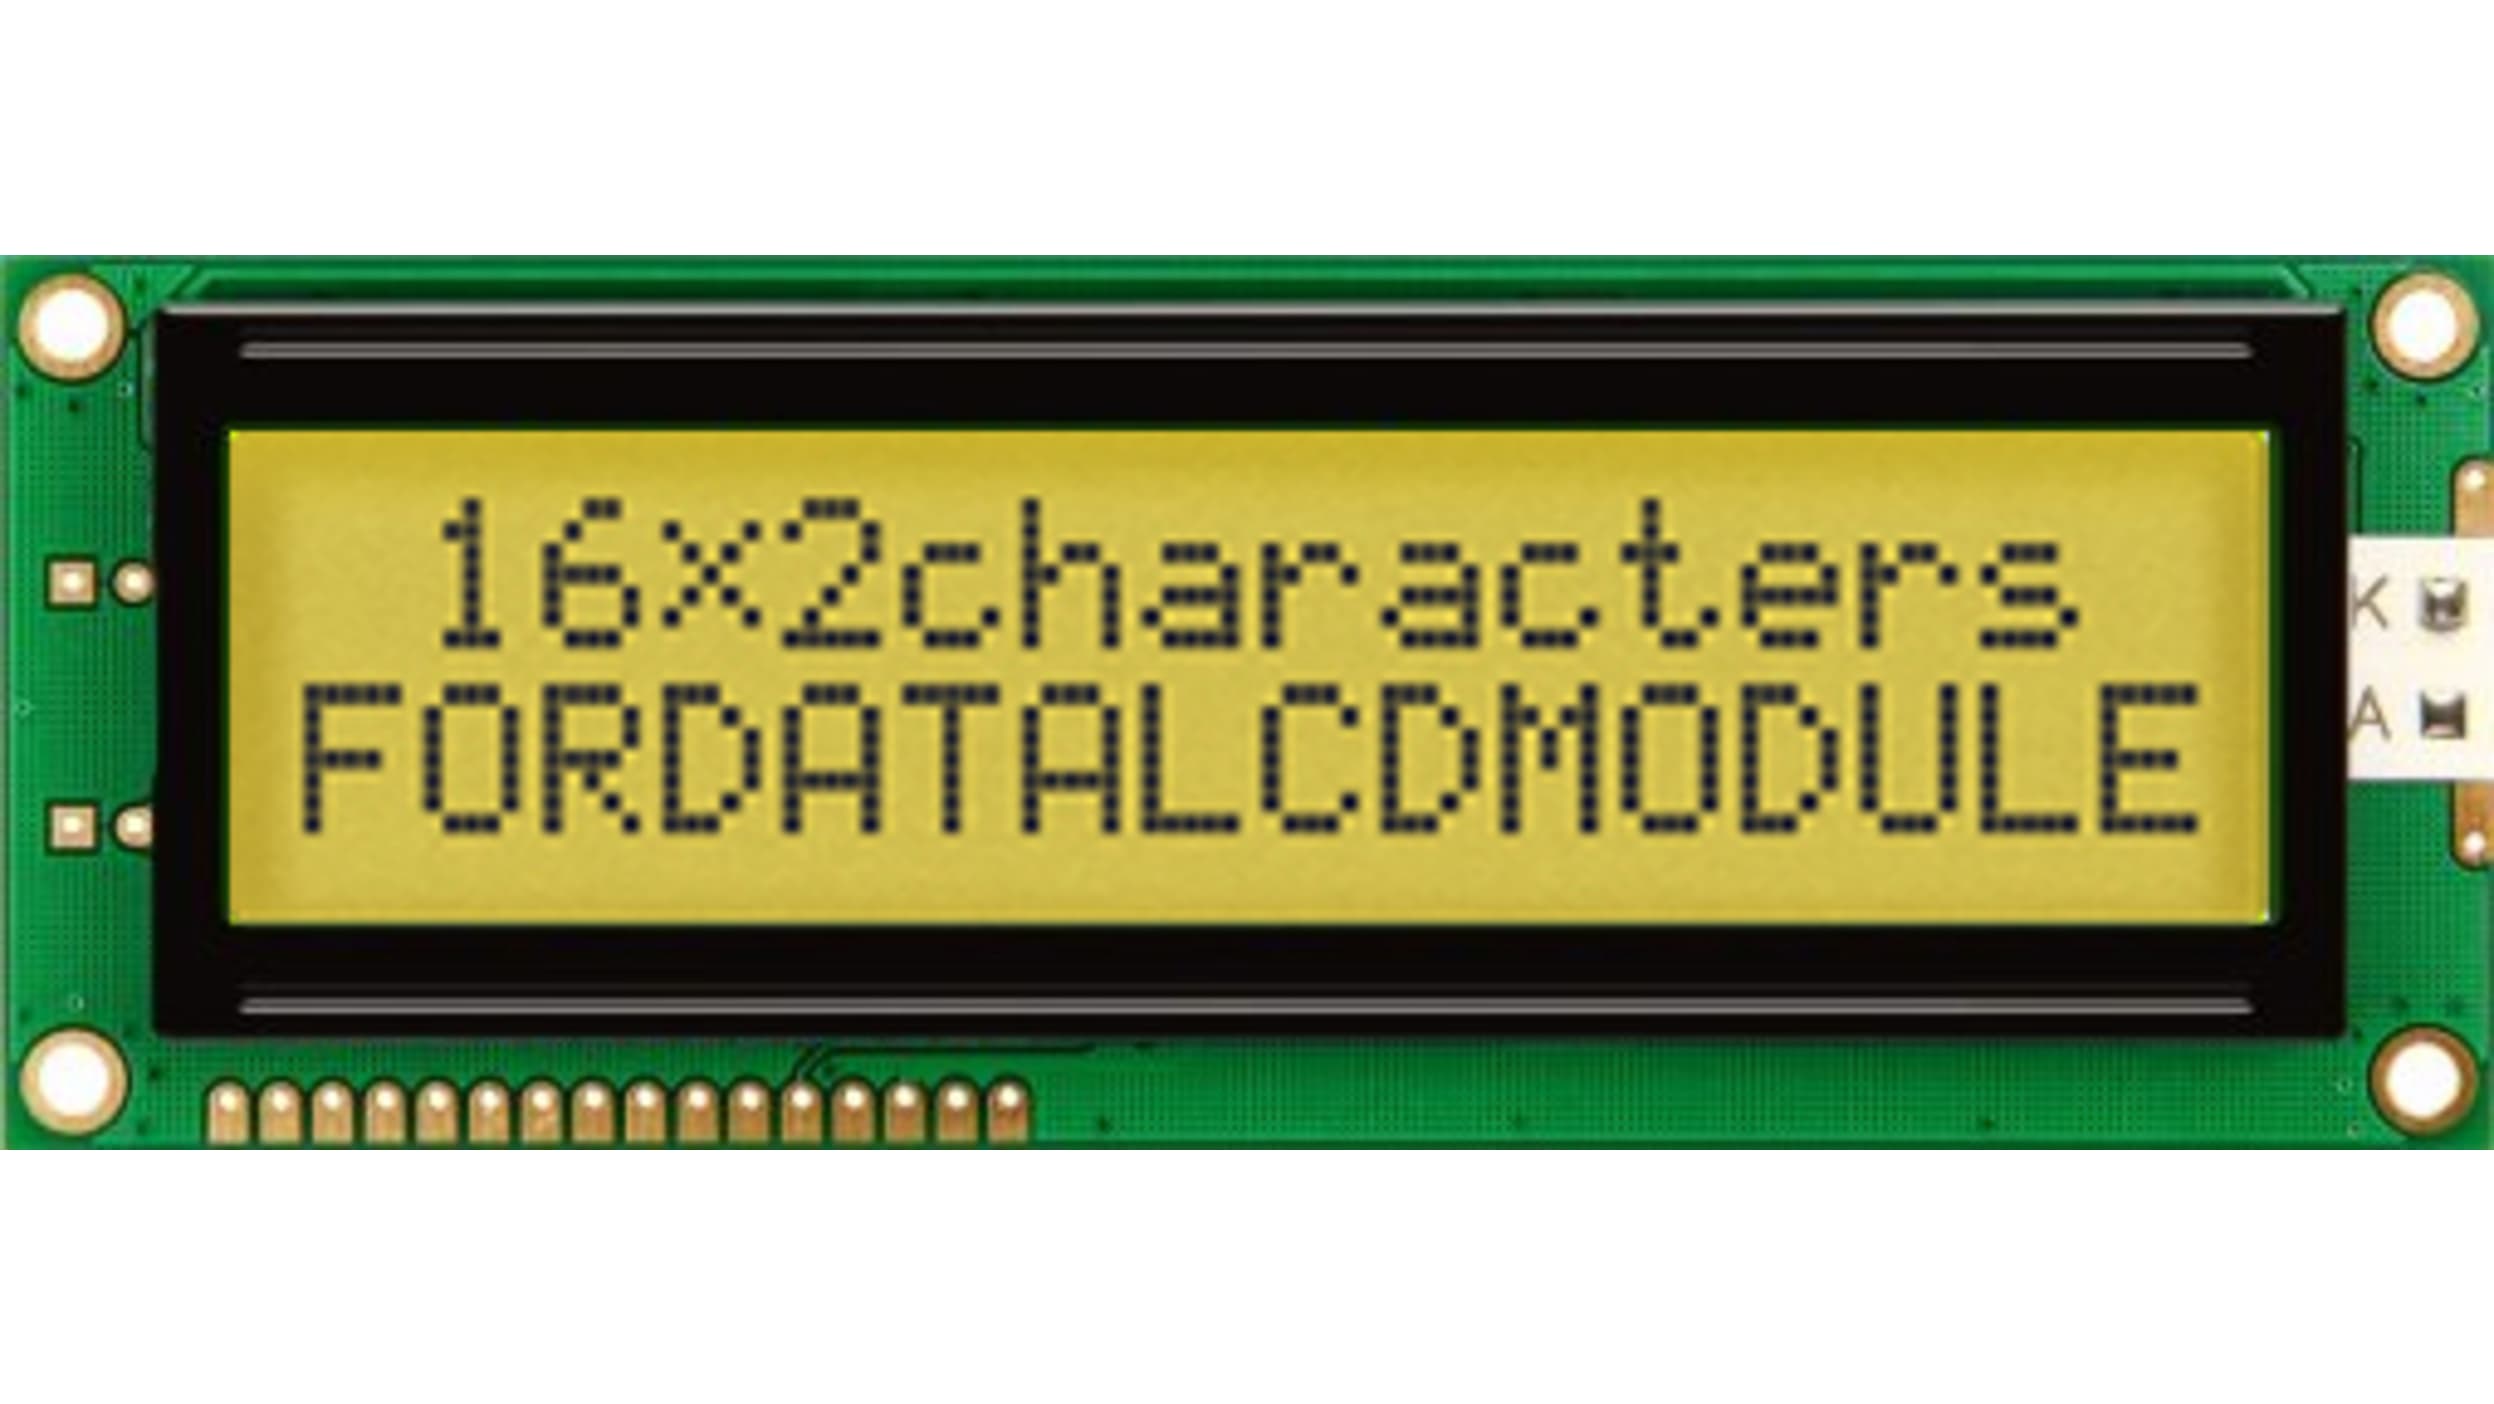 Fordata 液晶グラフィックディスプレイ 半透過型 LCD, 2列16文字 